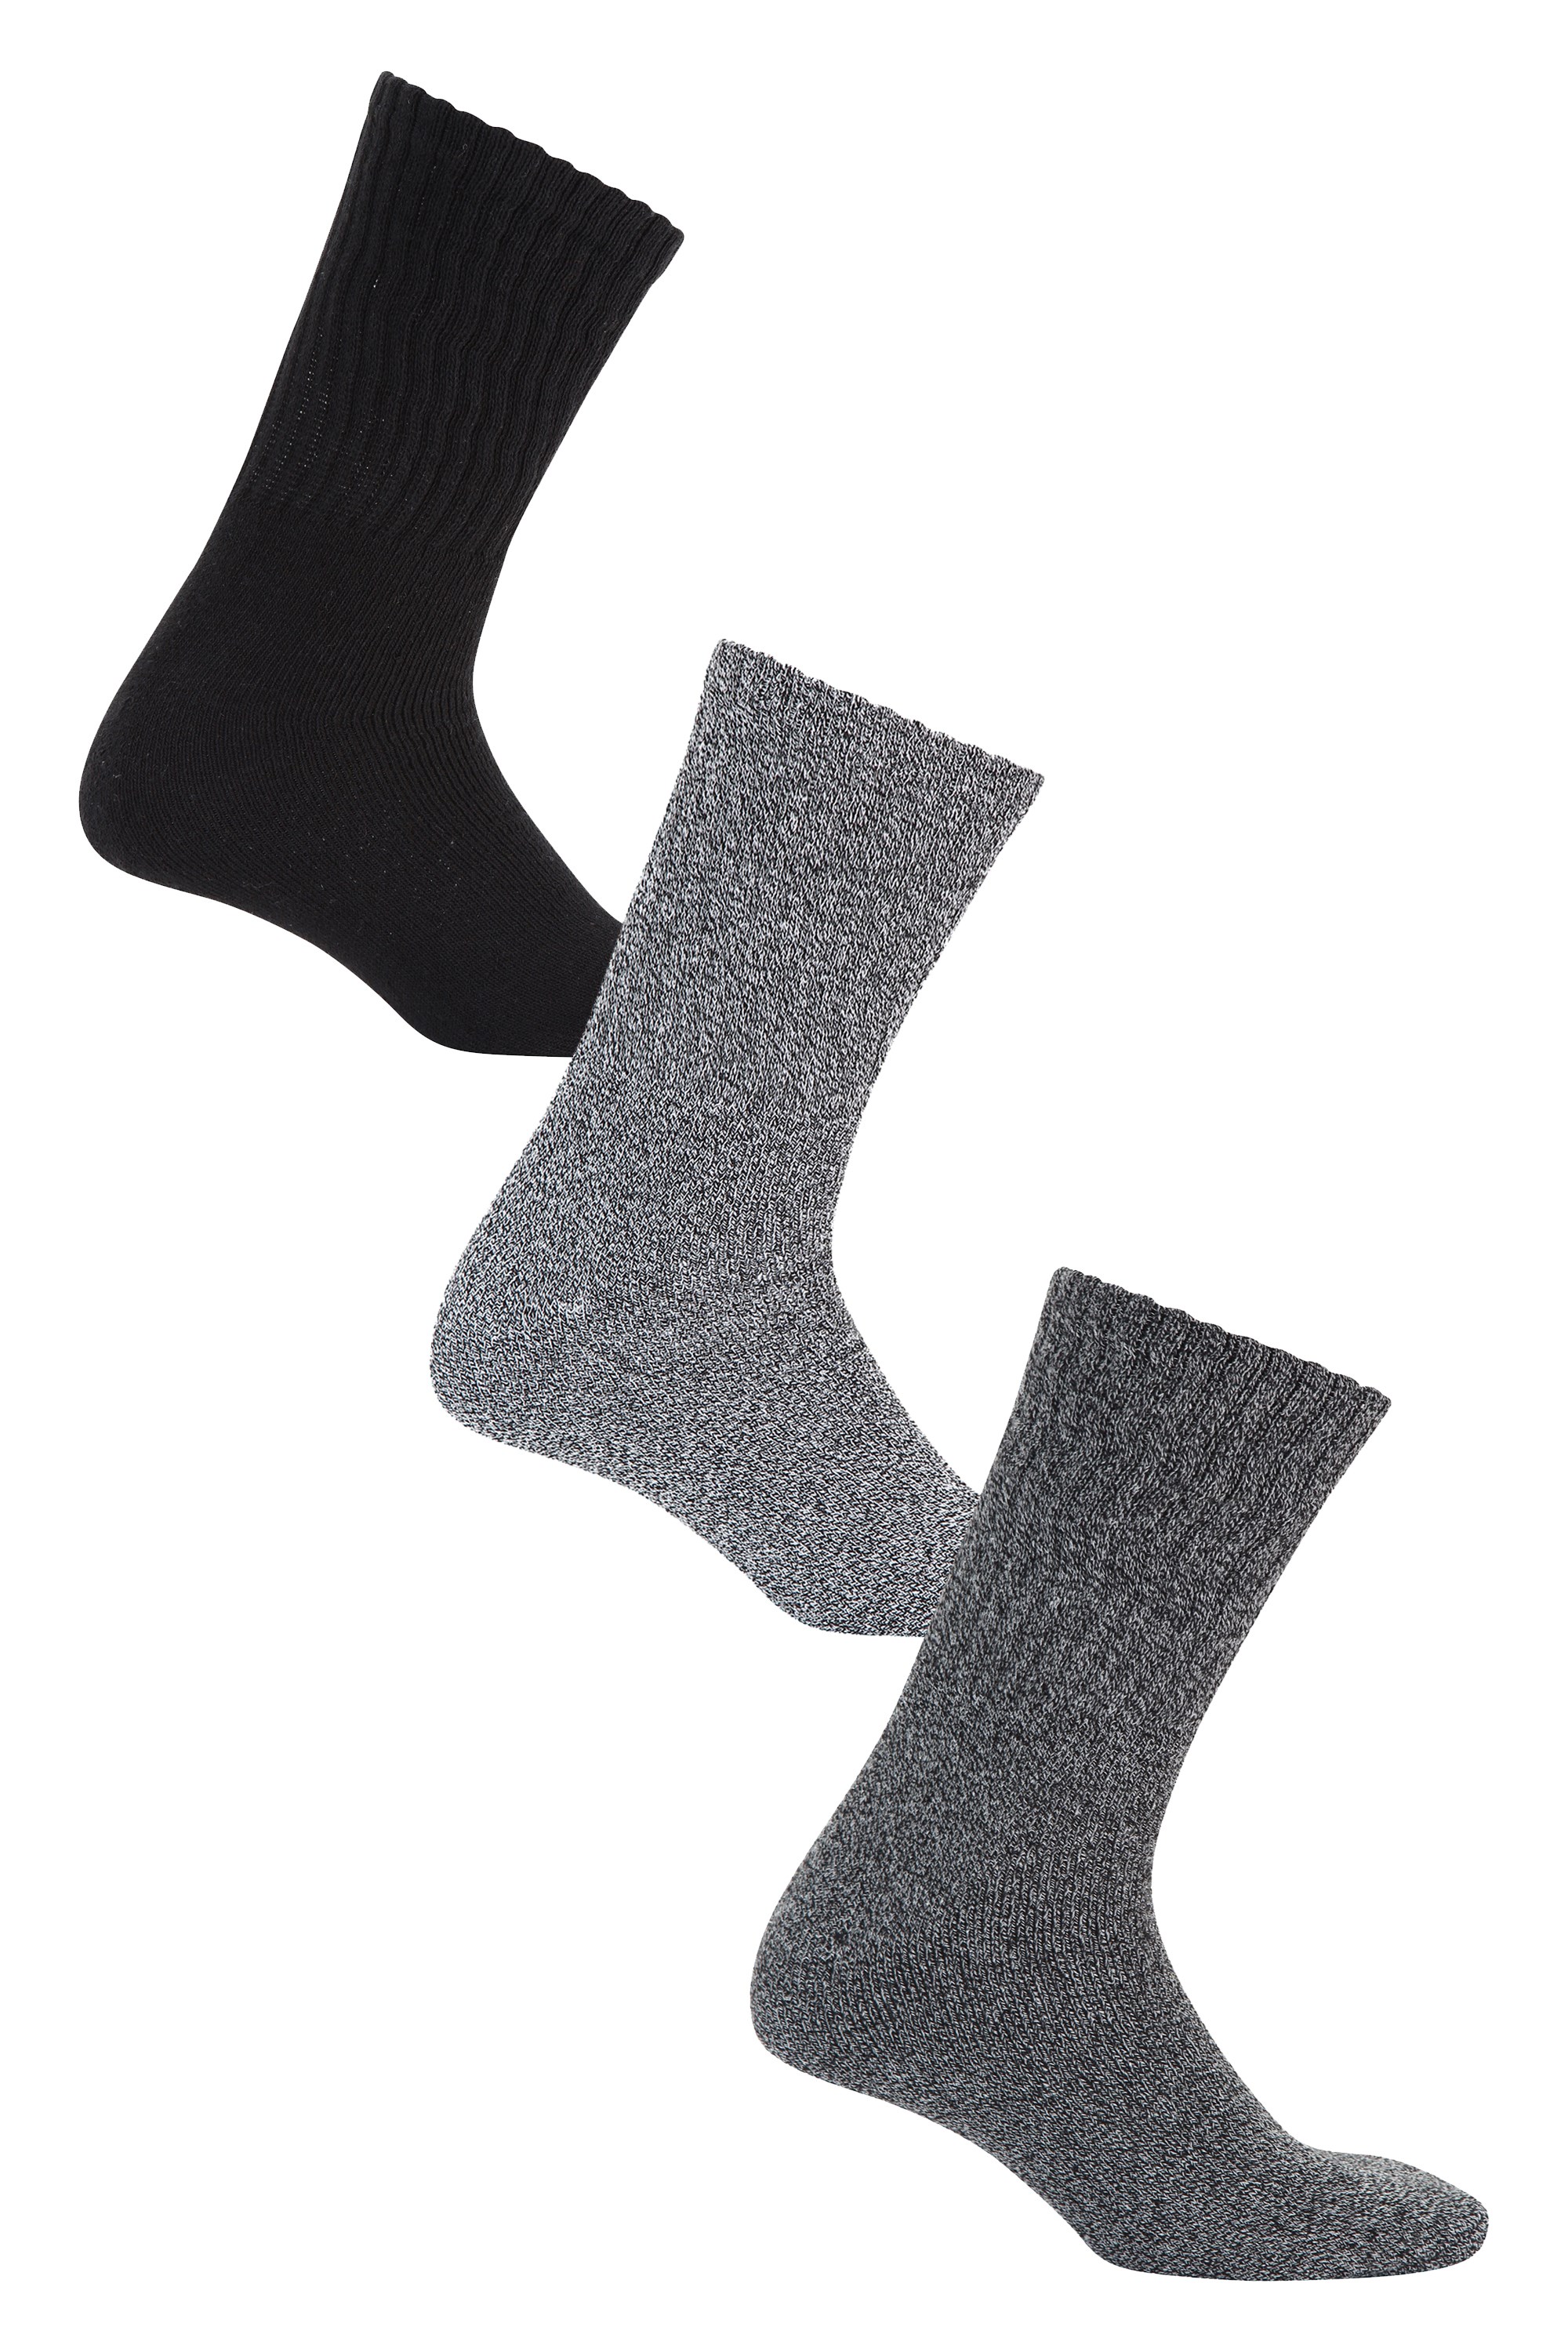 Outdoor Mens Socks 3-Pack Black